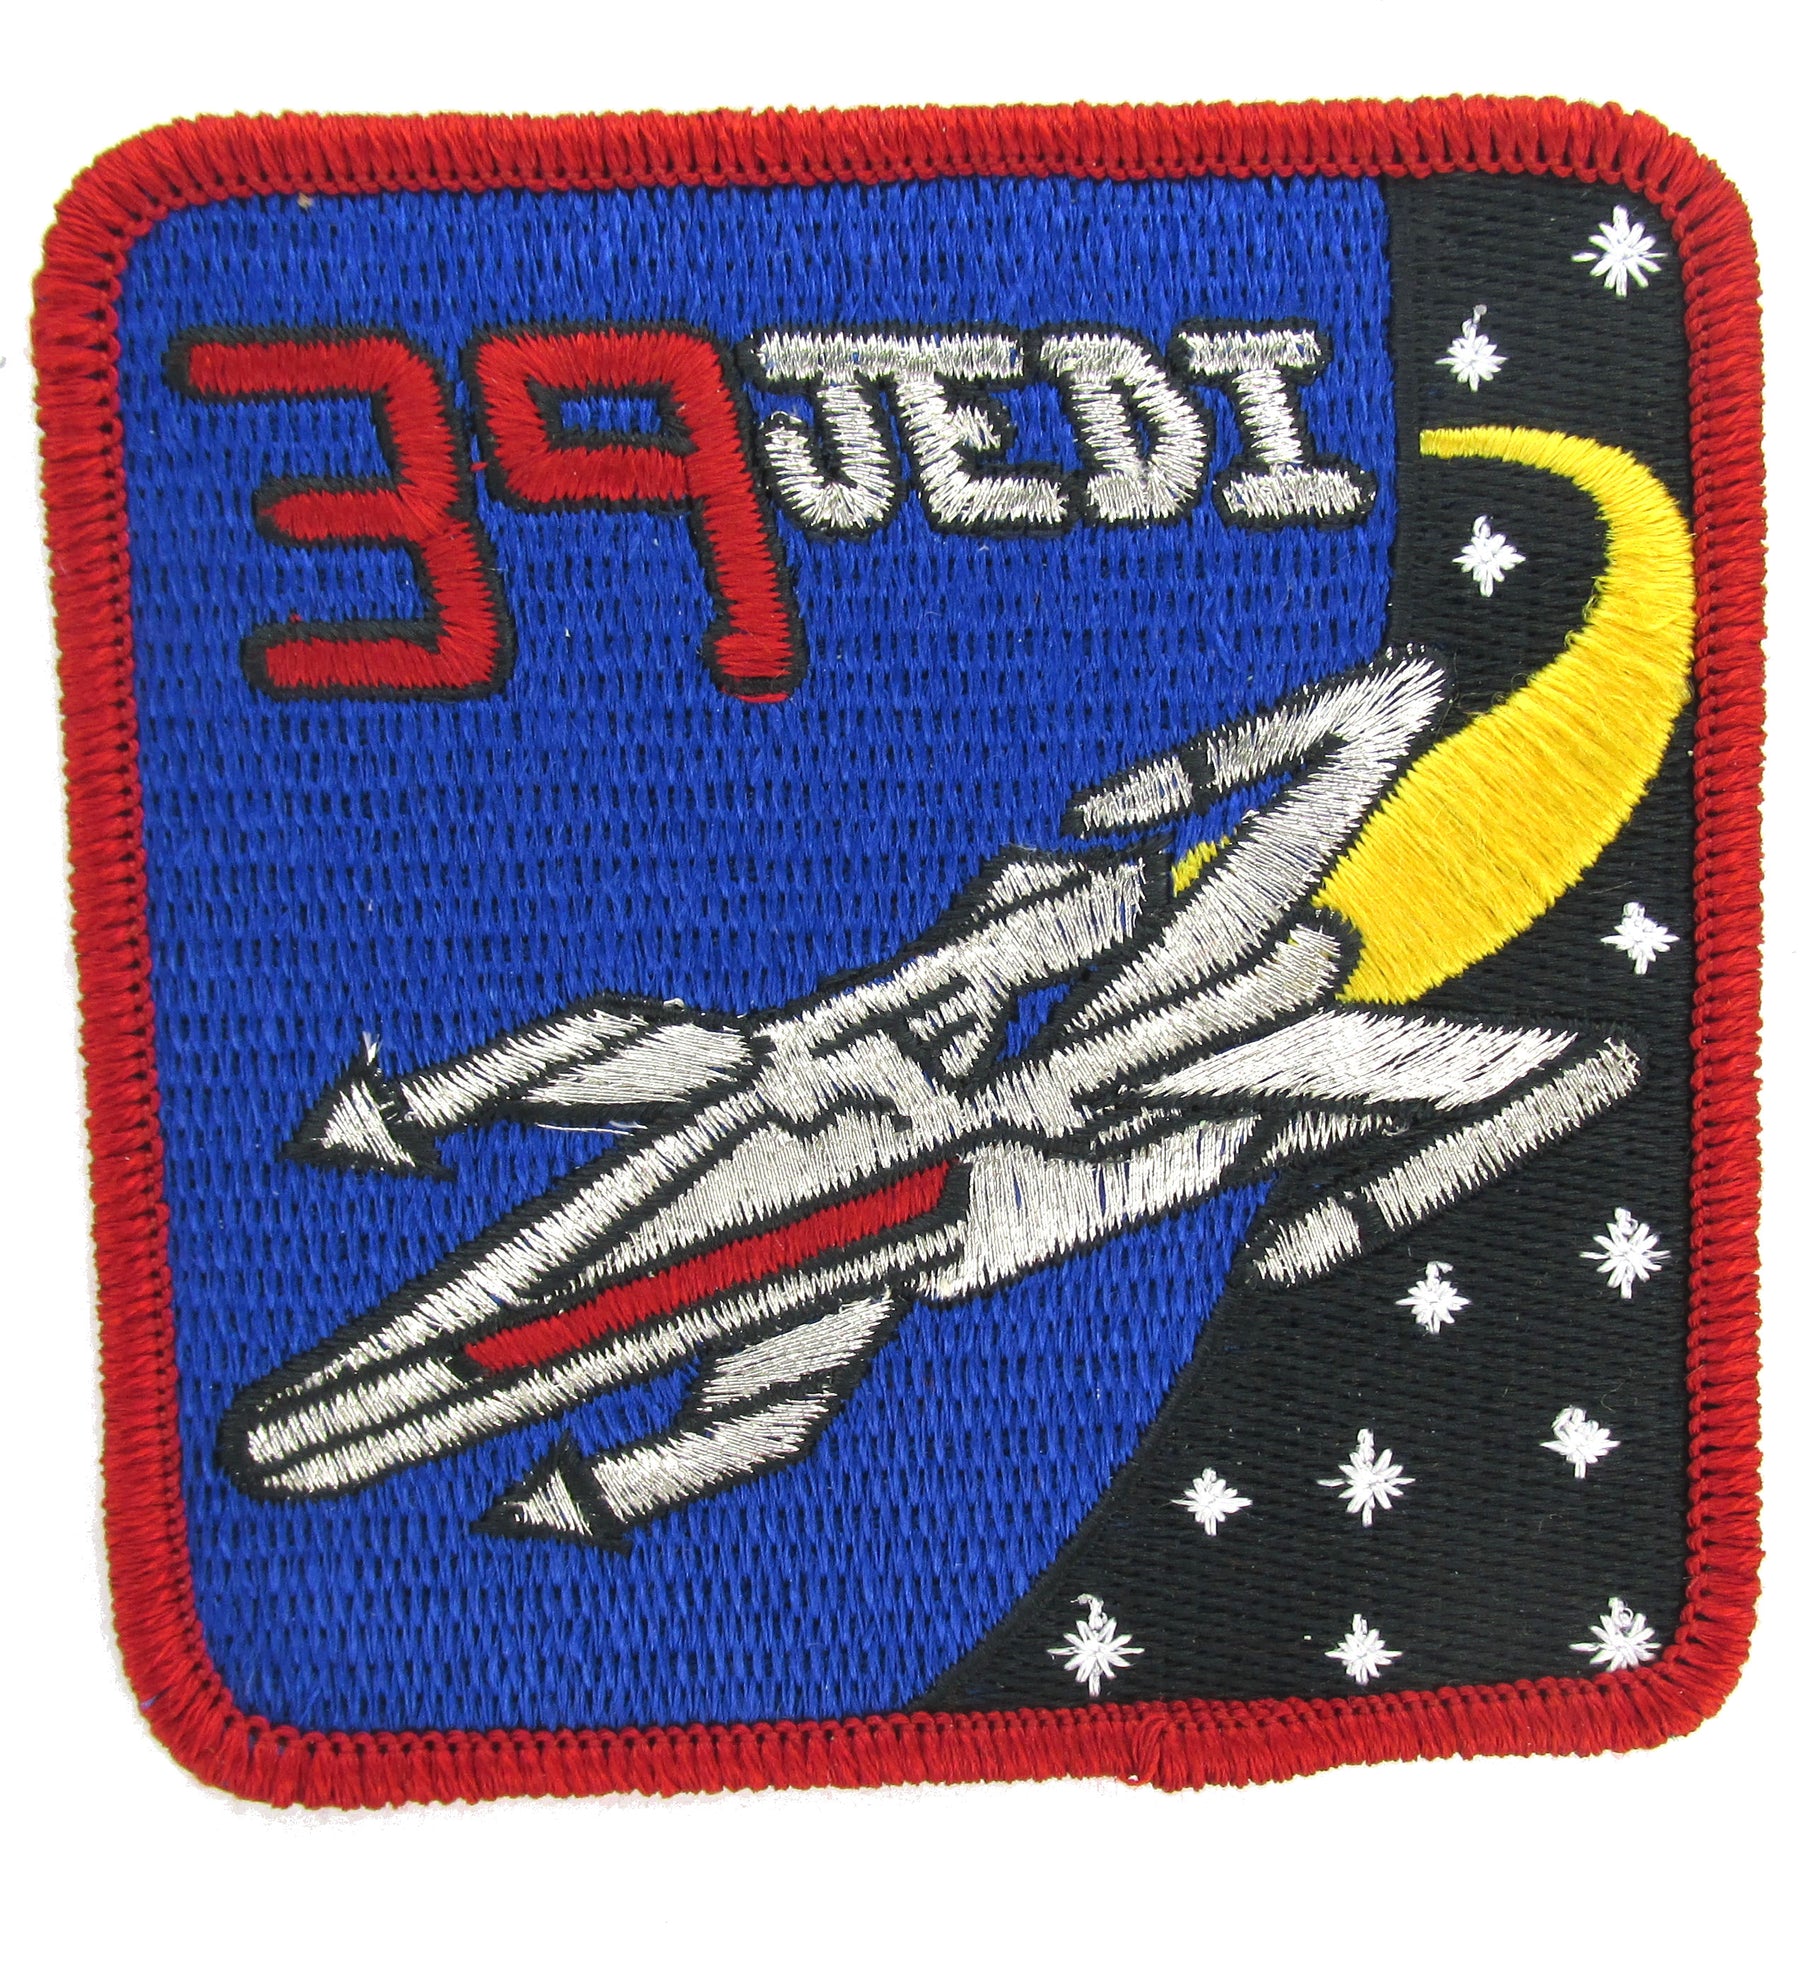  USAF Academy 39th Cadet Squadron Patch - Jedi Knights